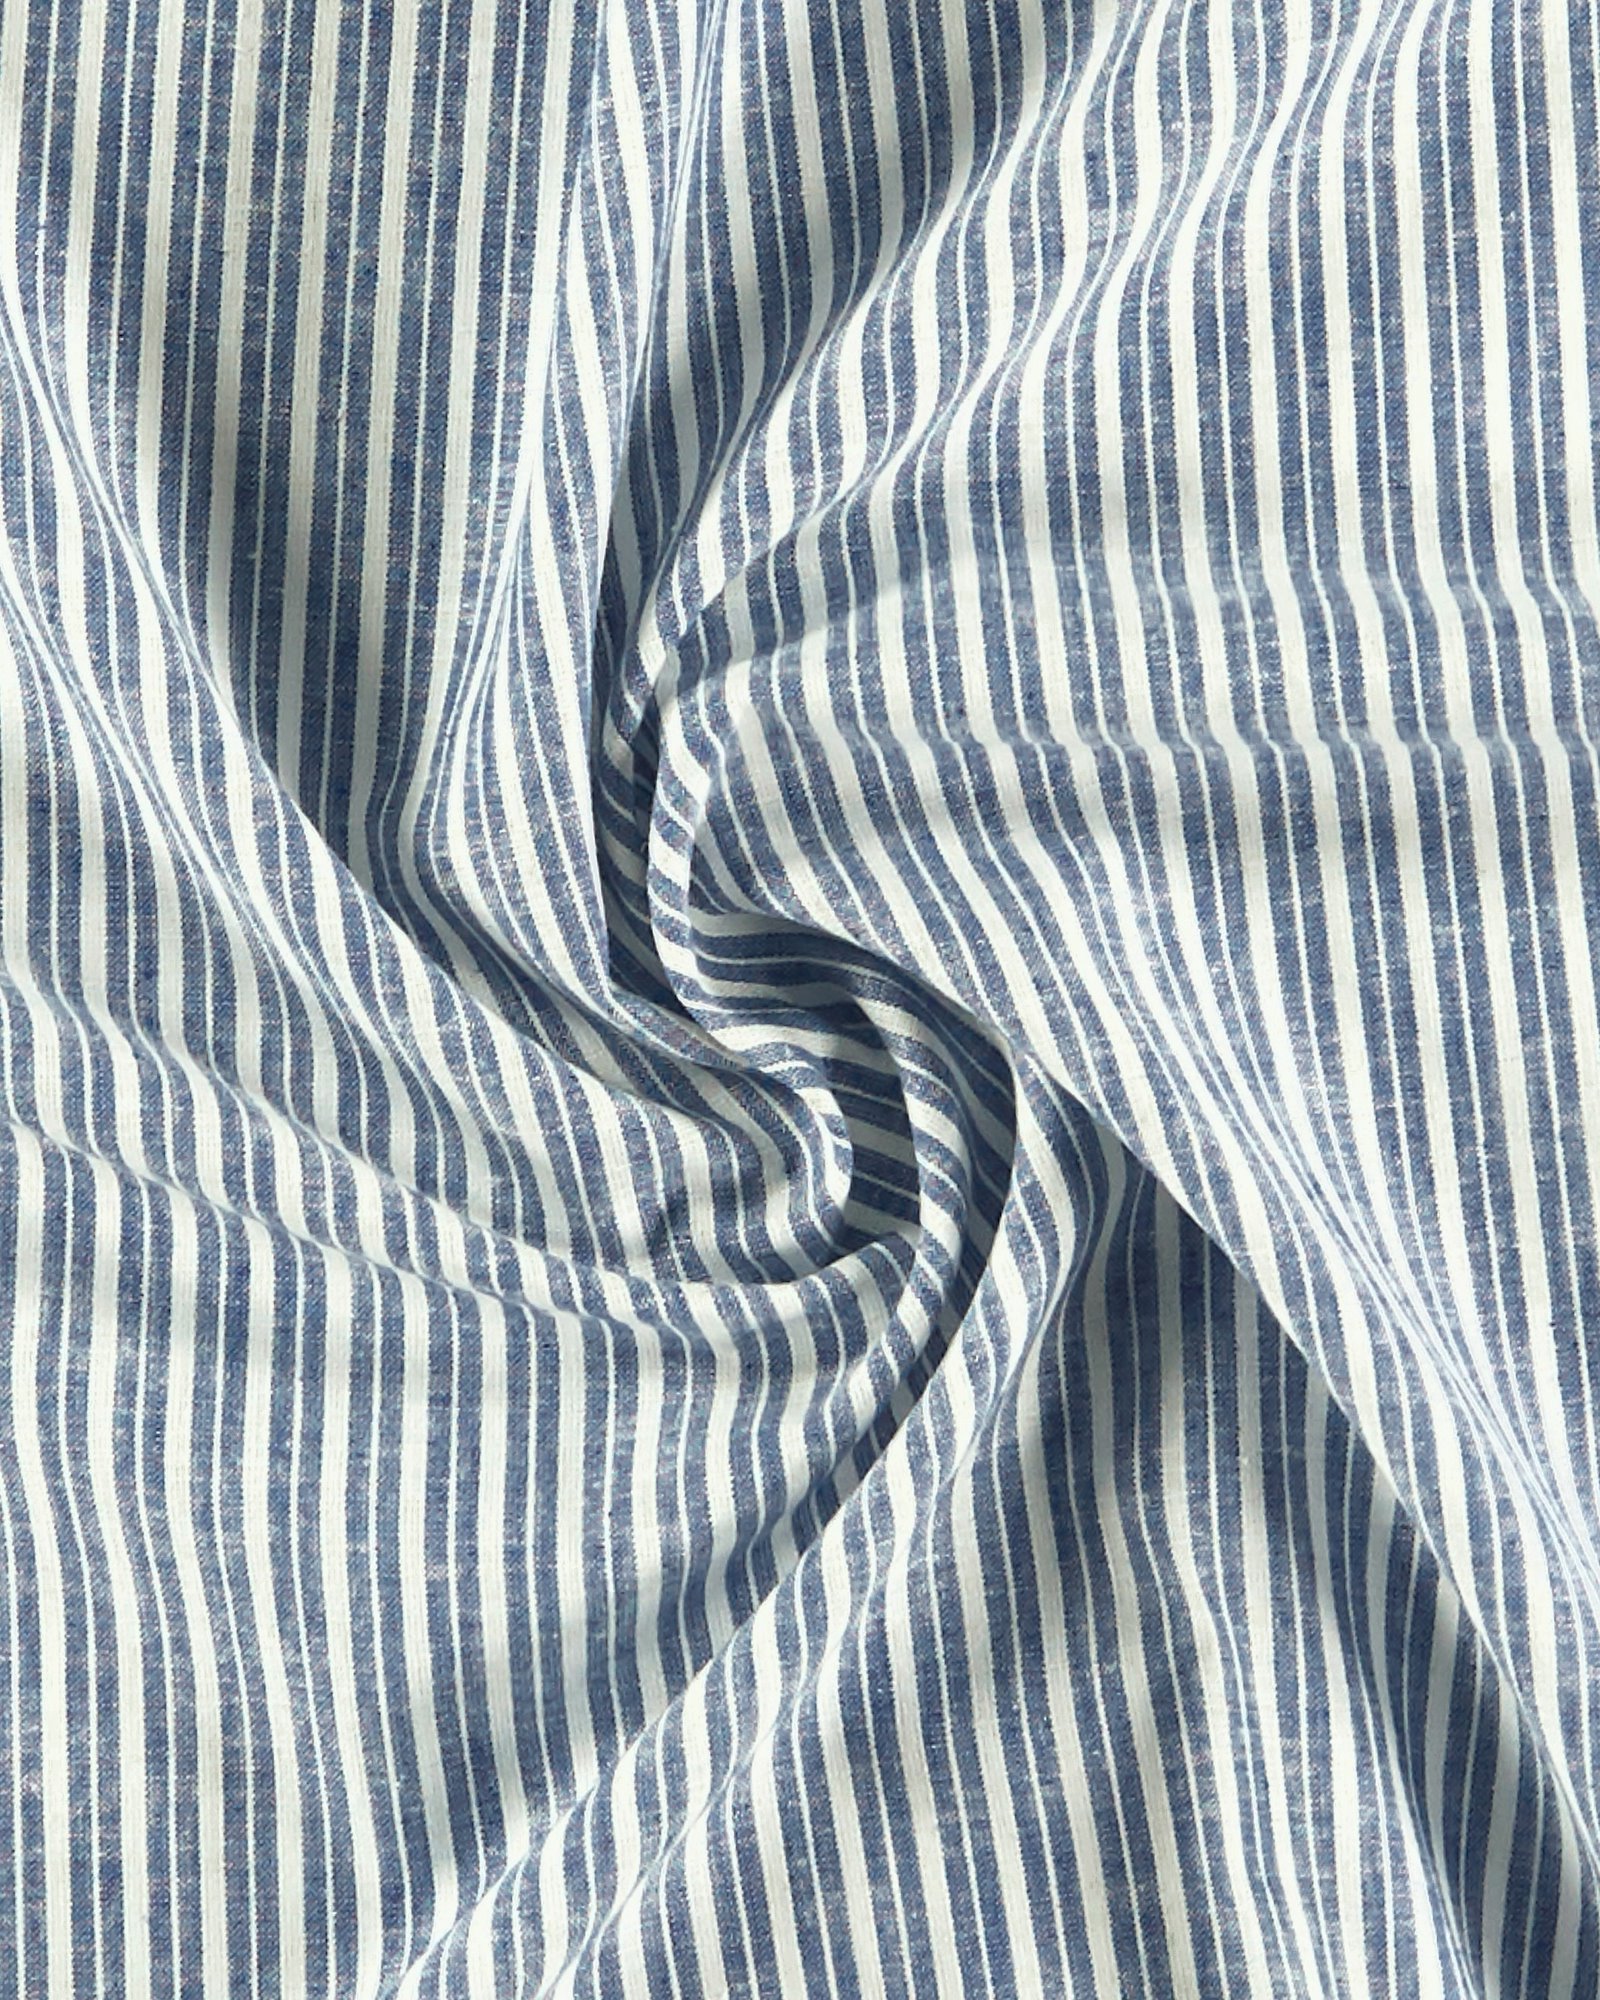 Linen/cotton YD stripe blue/offwhite 816320_pack